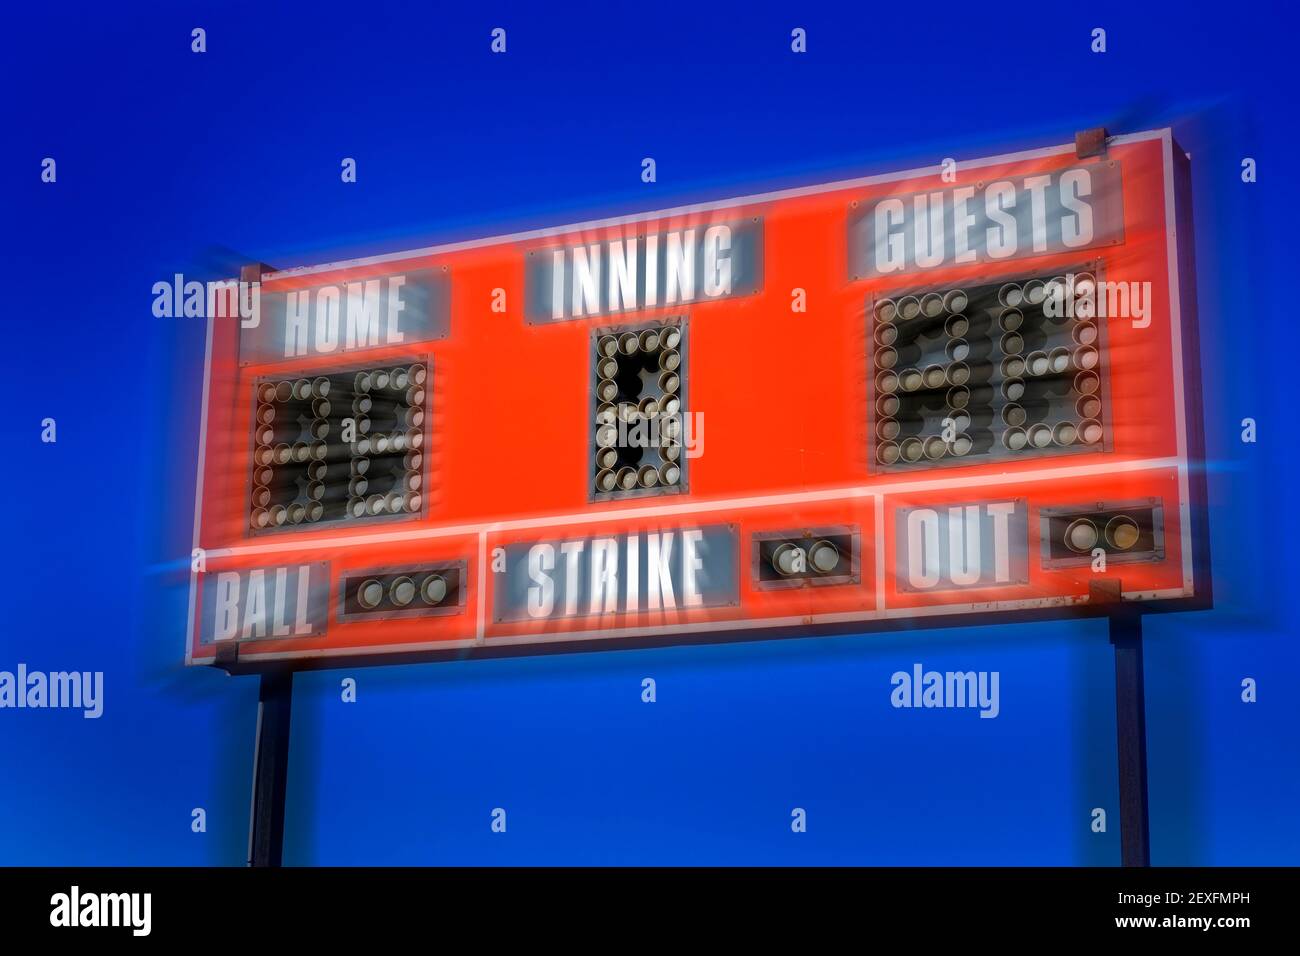 Baseball-Anzeigetafel mit Details der Score Ball Strike Innings Zoom  Bewegungsunschärfe Stockfotografie - Alamy